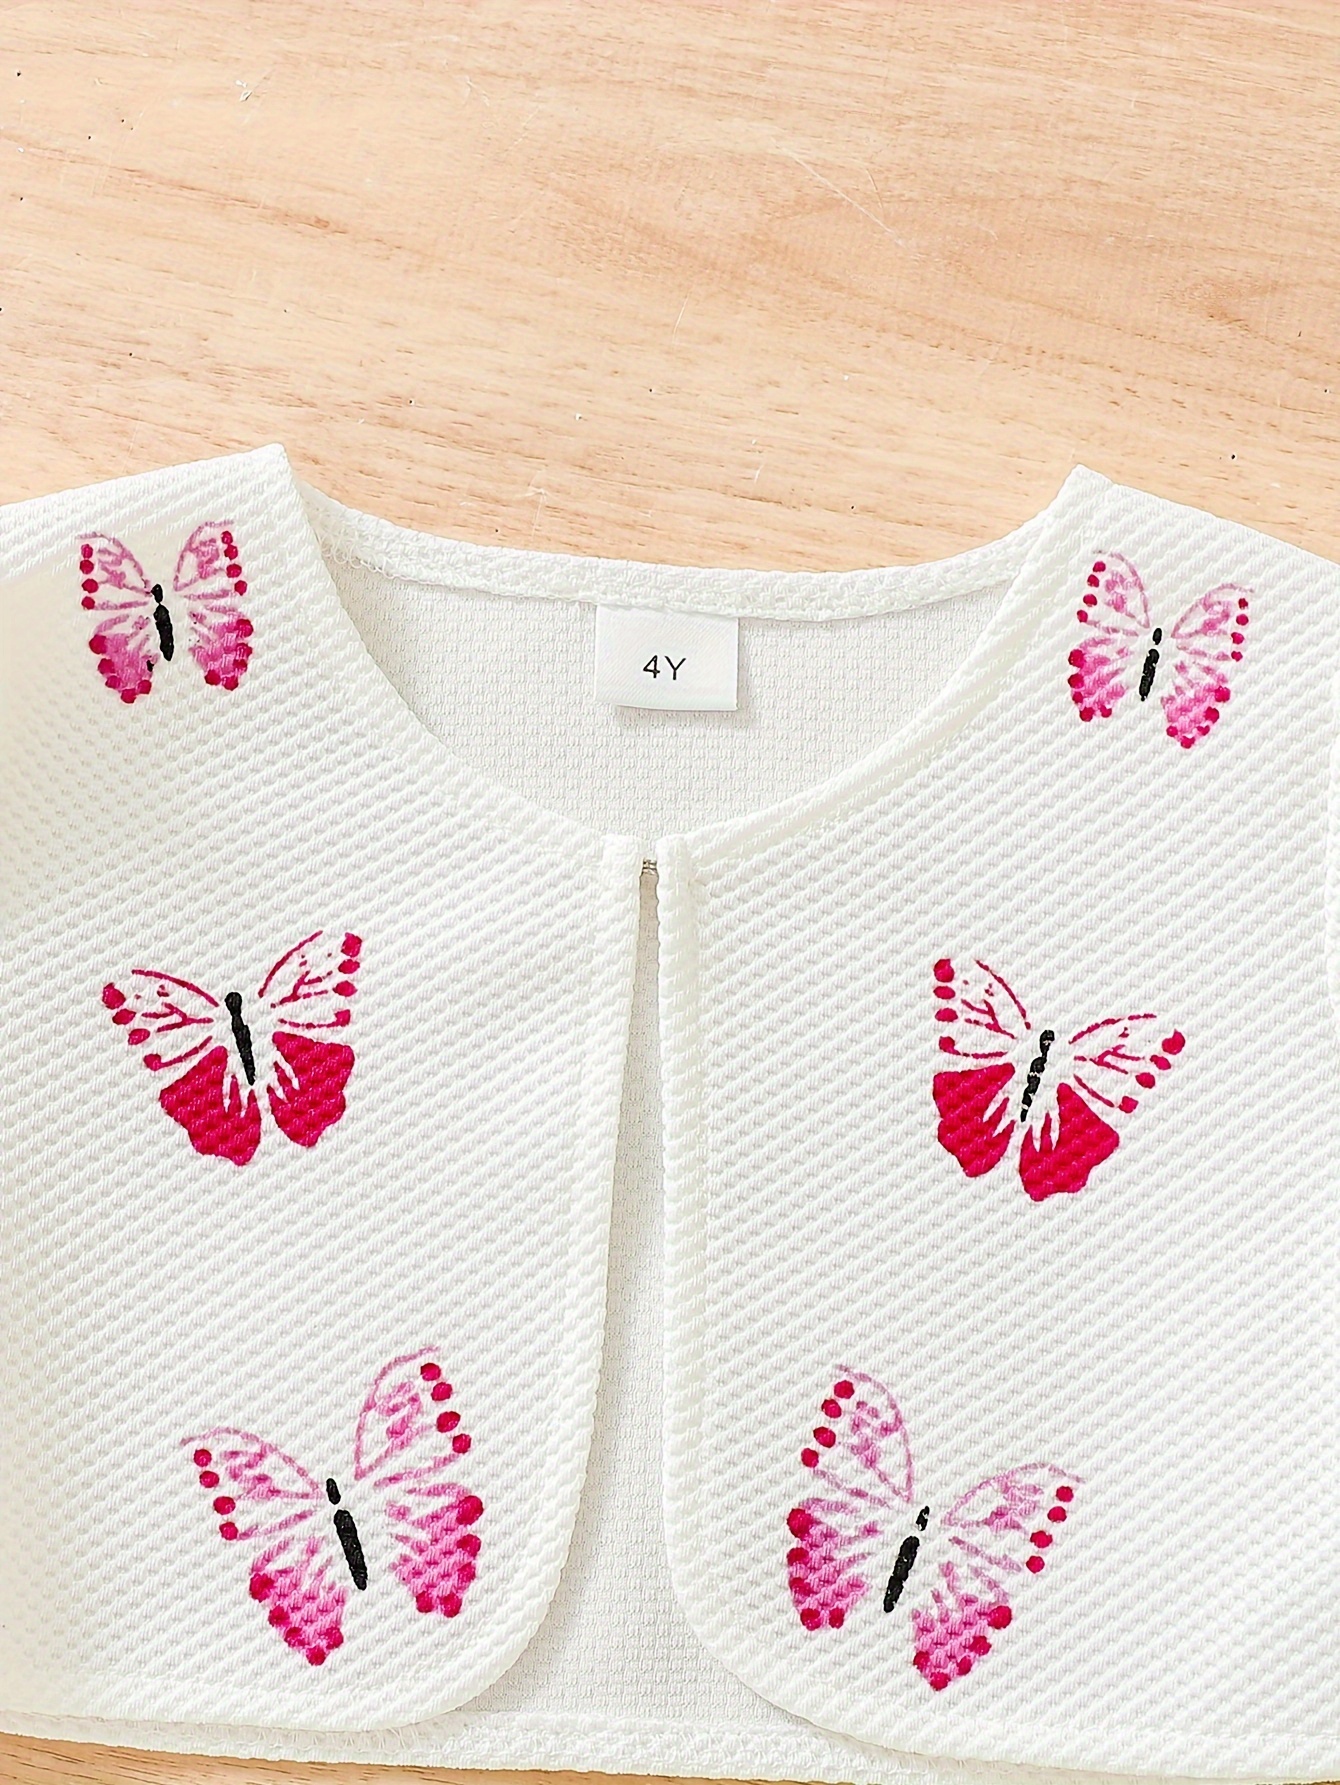 Cute Bugs Butterfly Applique Design #1